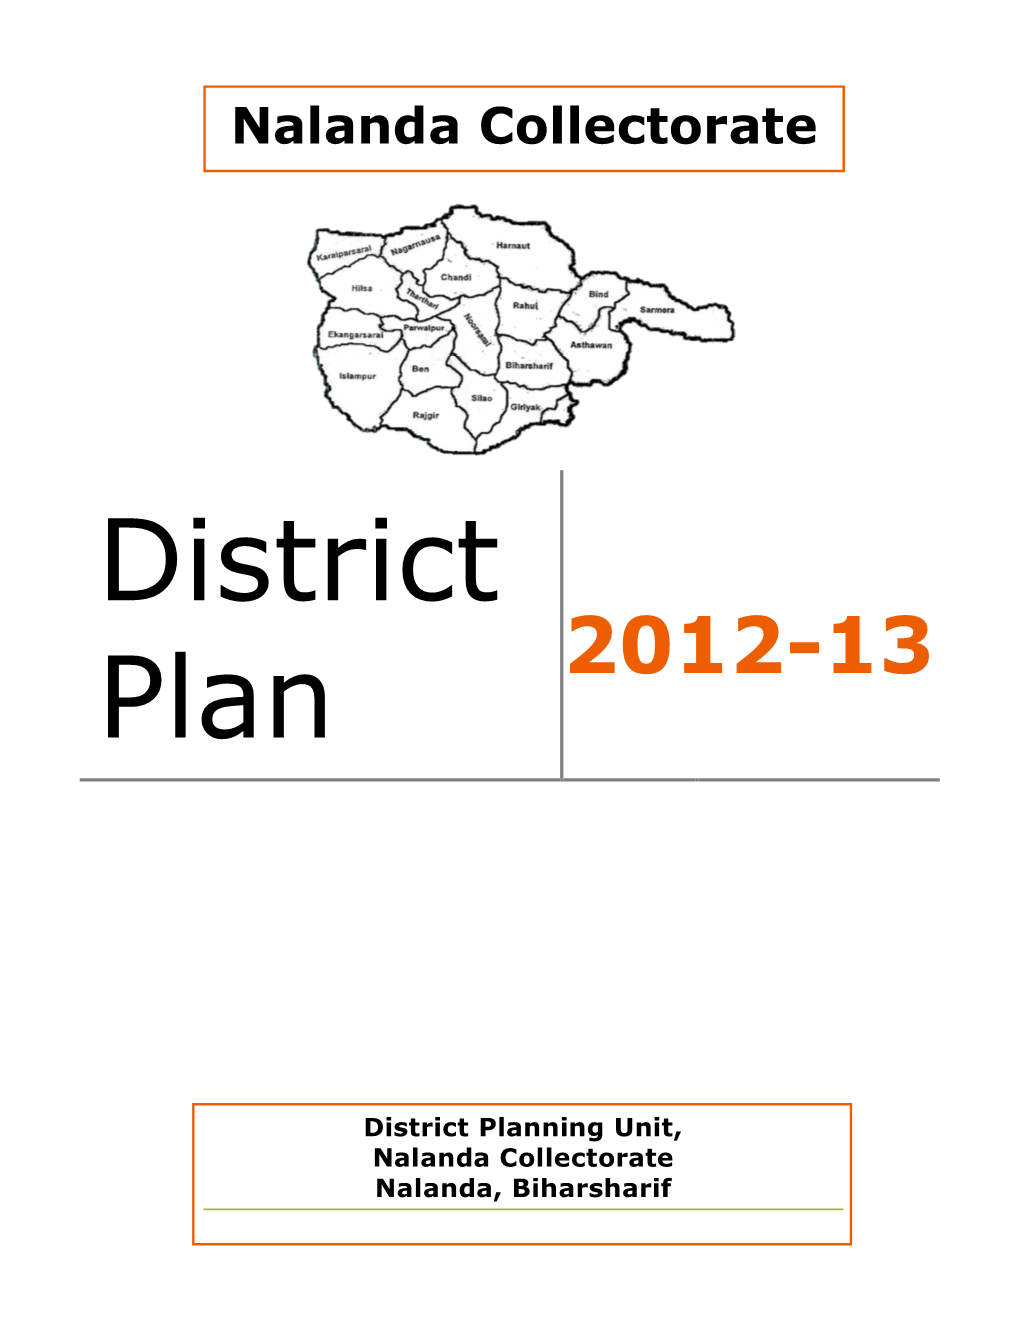 Nalanda Annual District Plan 2012-13